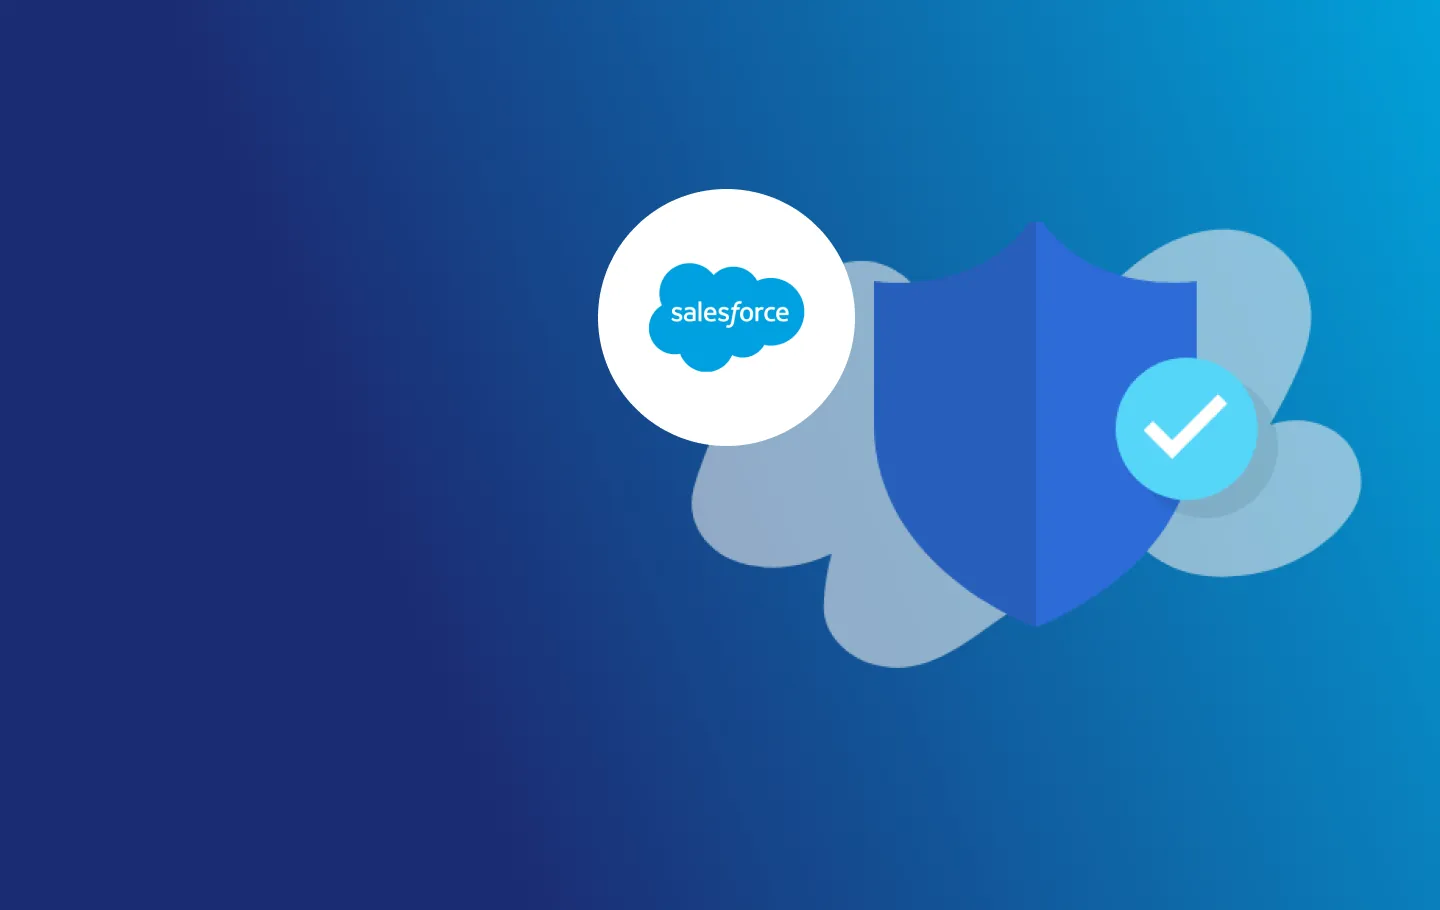 Salesforce logo on a blue background